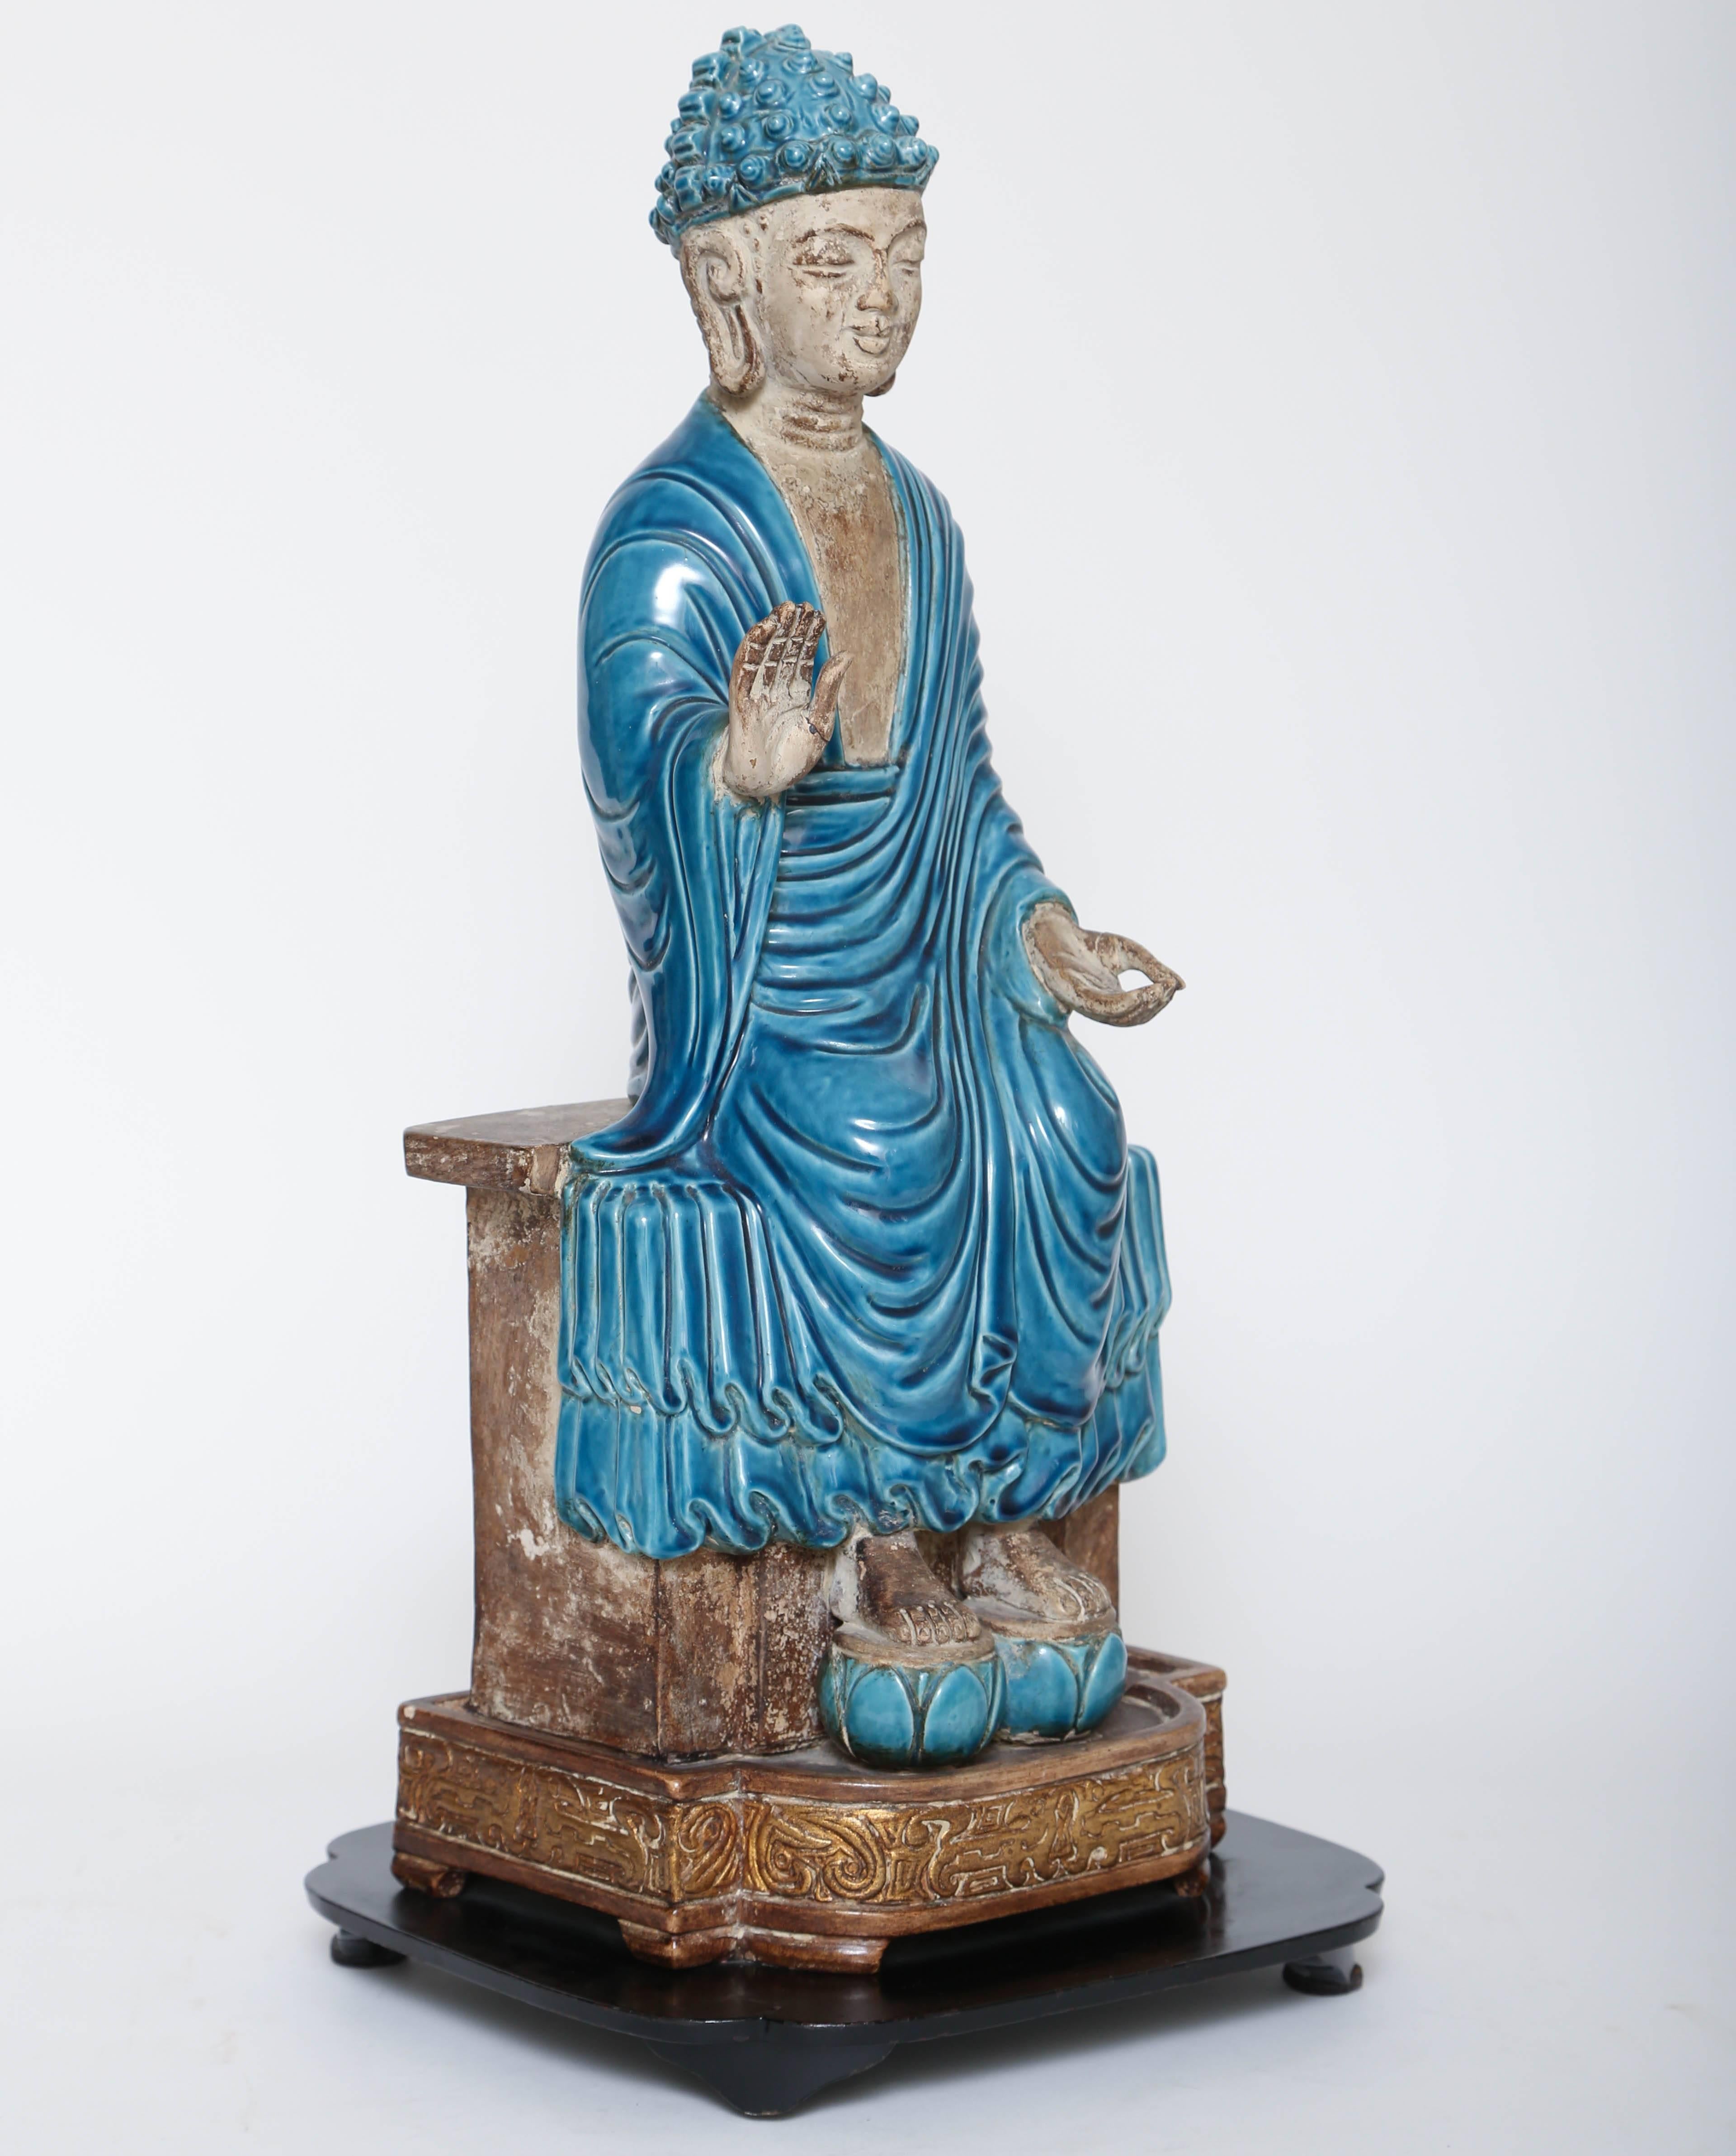 Decorative terracotta Buddha with turquoise accents on gilt and ebony base.